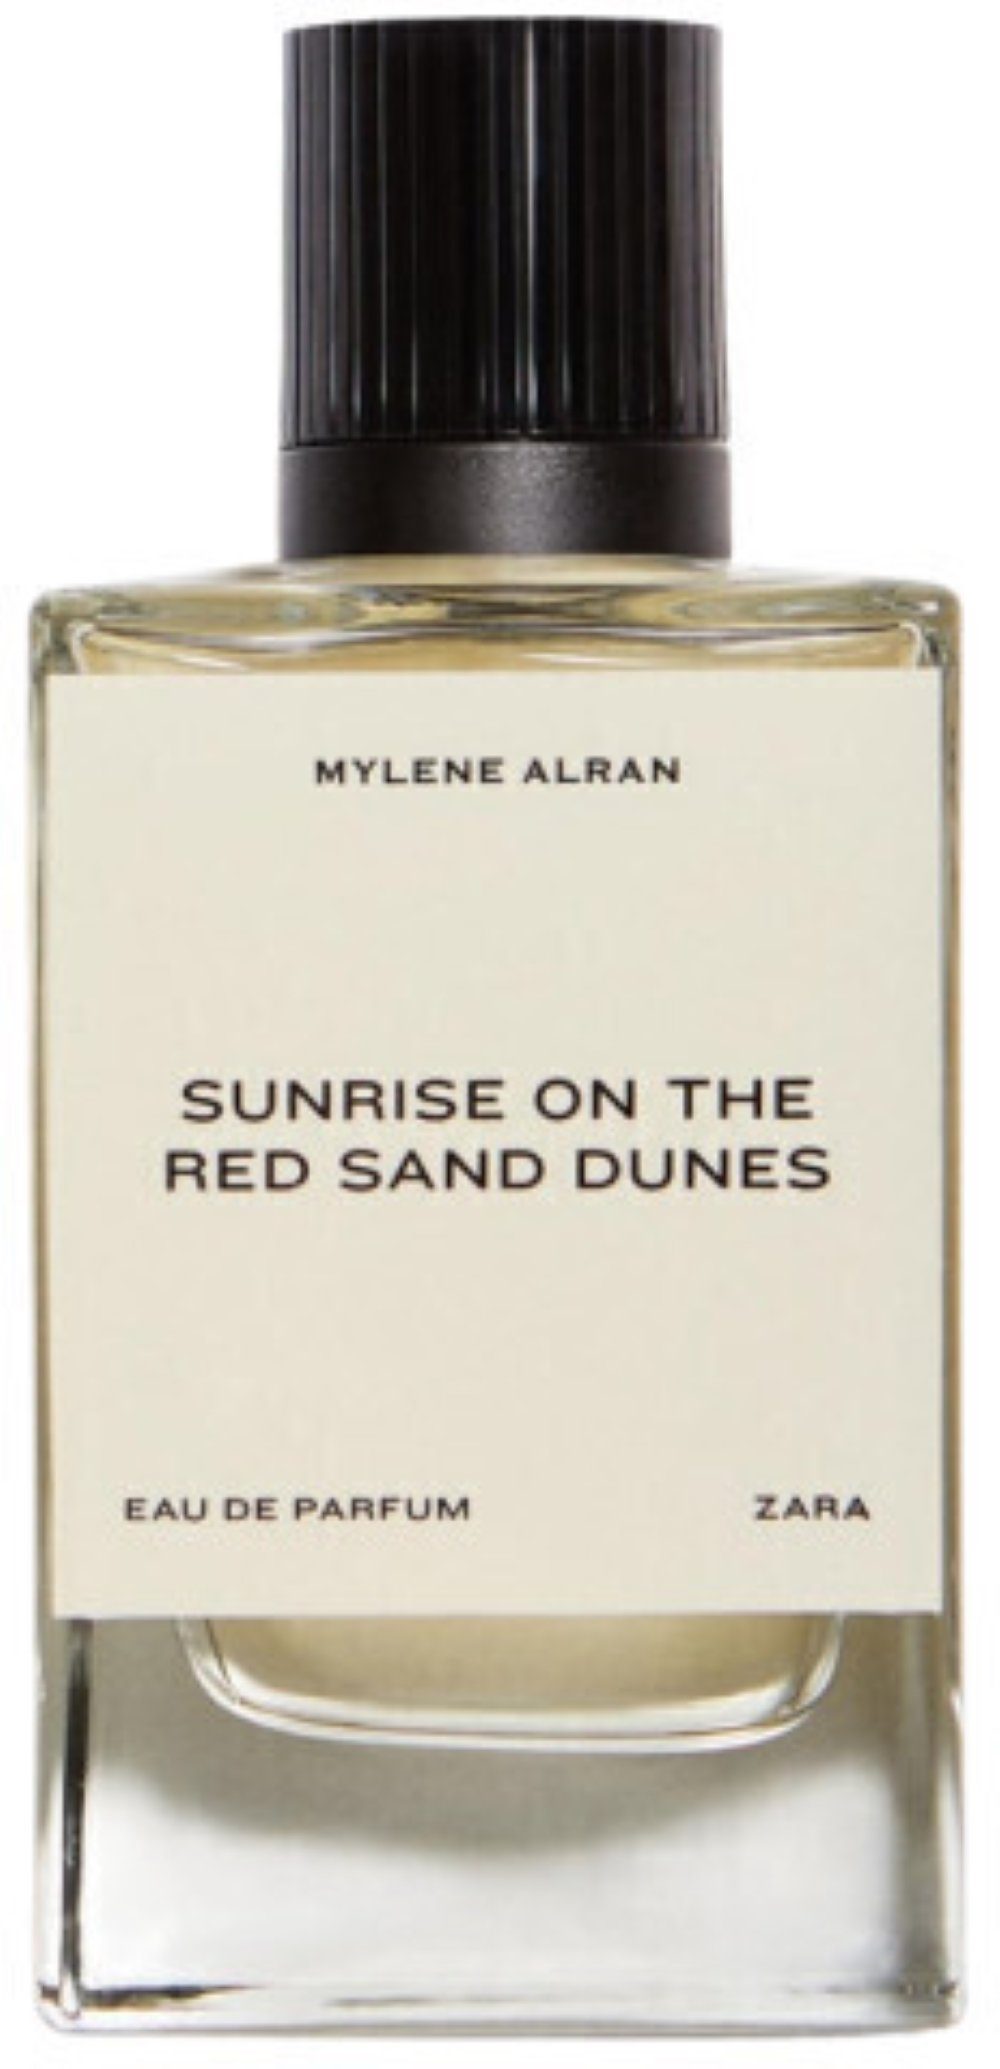 Zara Sunrise Dunes On Sand The Parfum Red de Eau